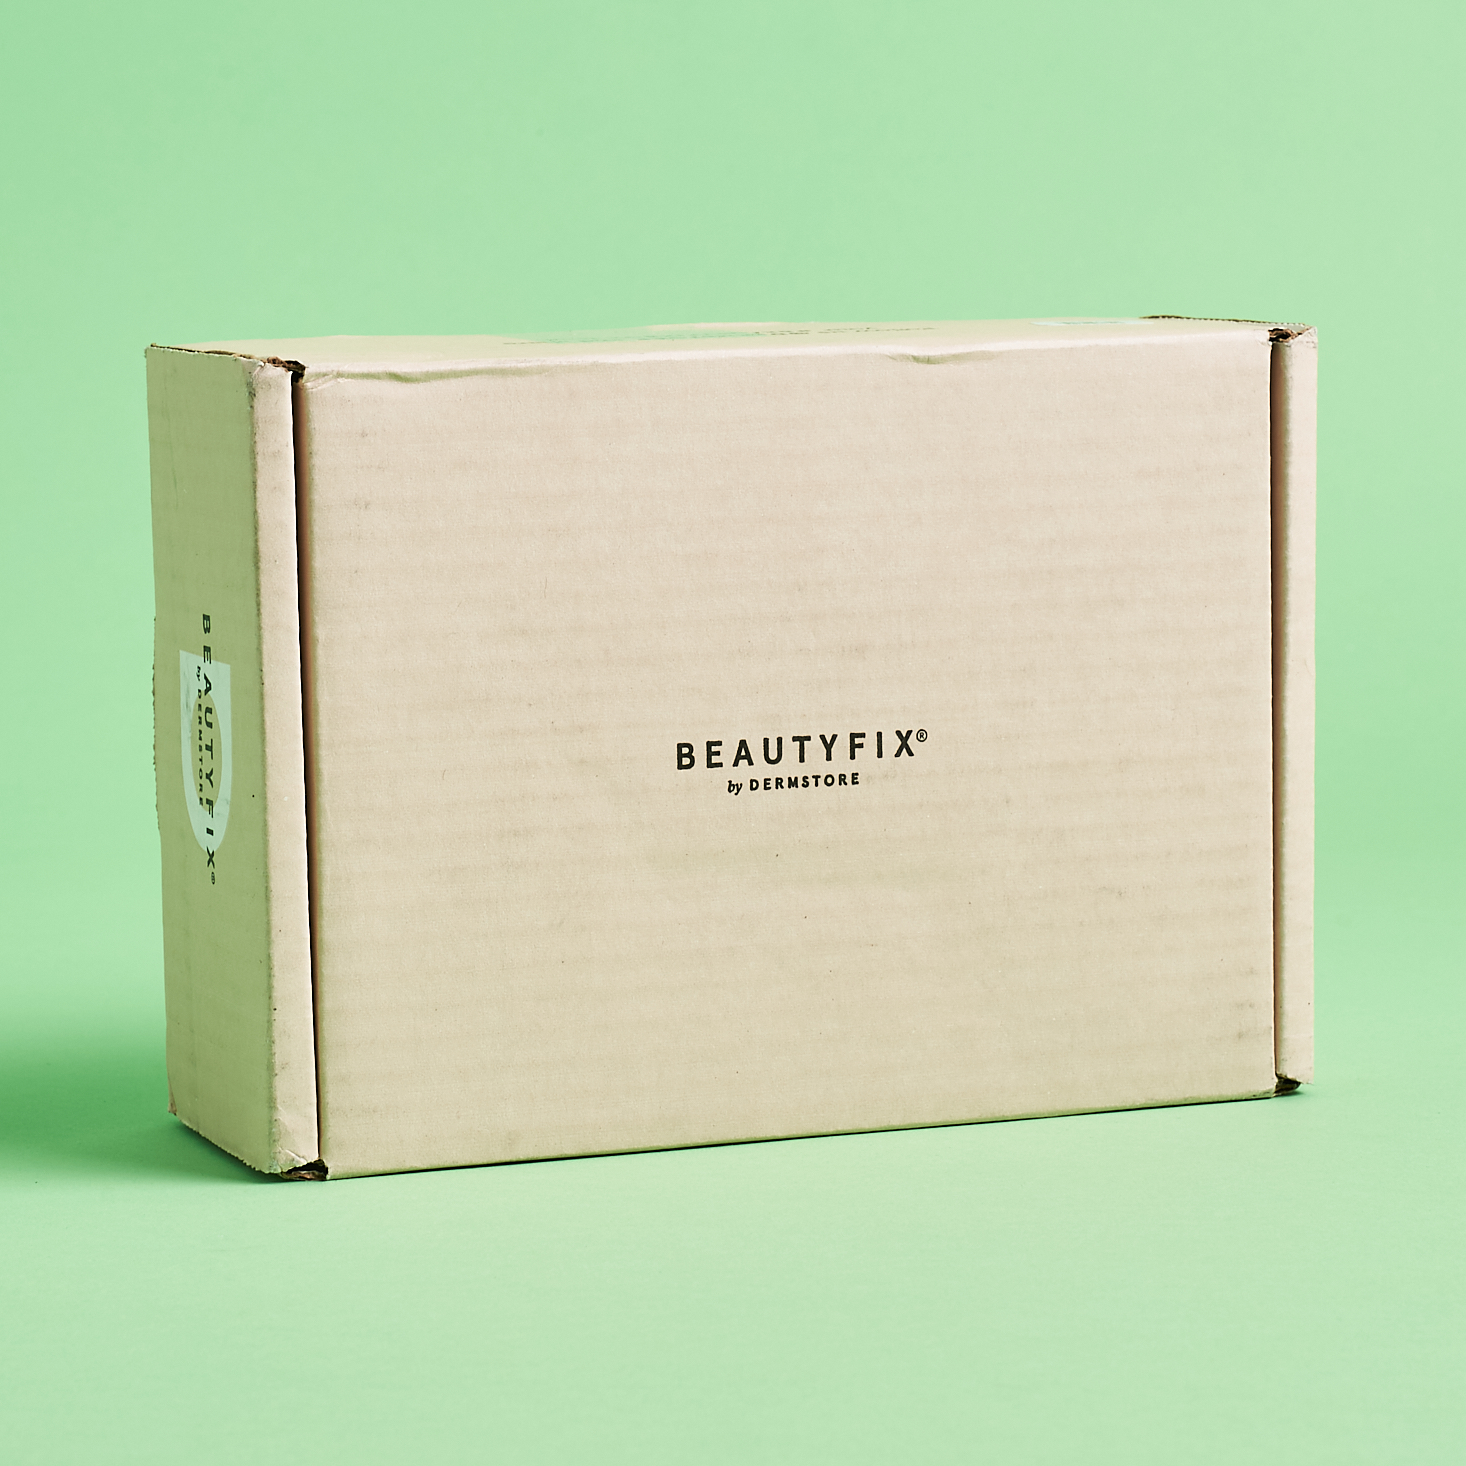 BeautyFIX Subscription Box Review – January 2021